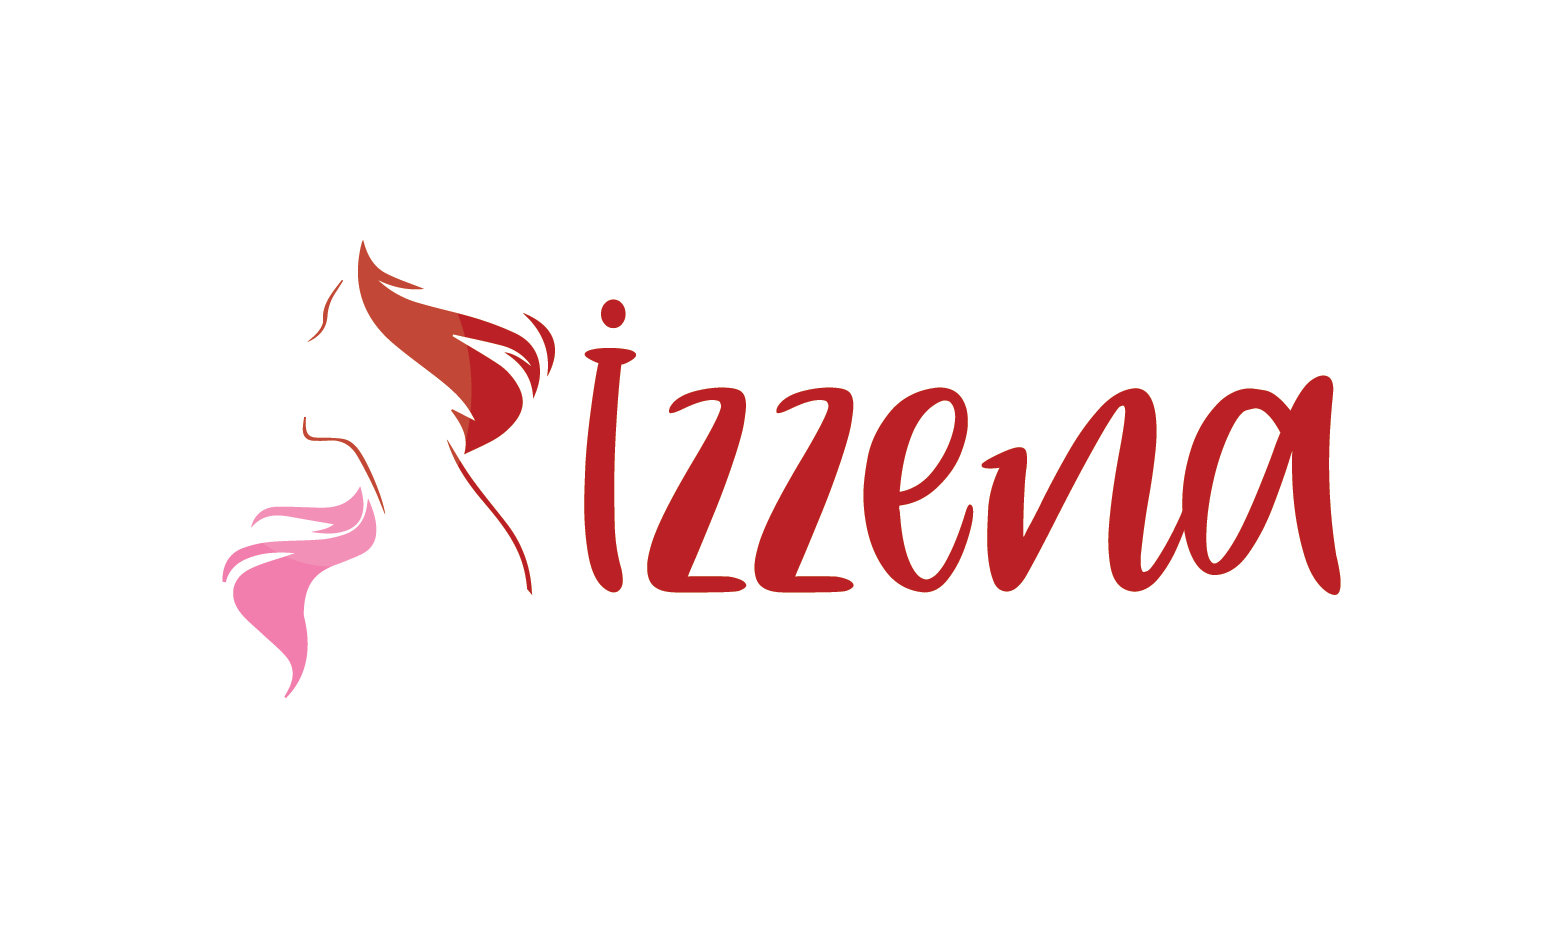 Izzena.com - Creative brandable domain for sale